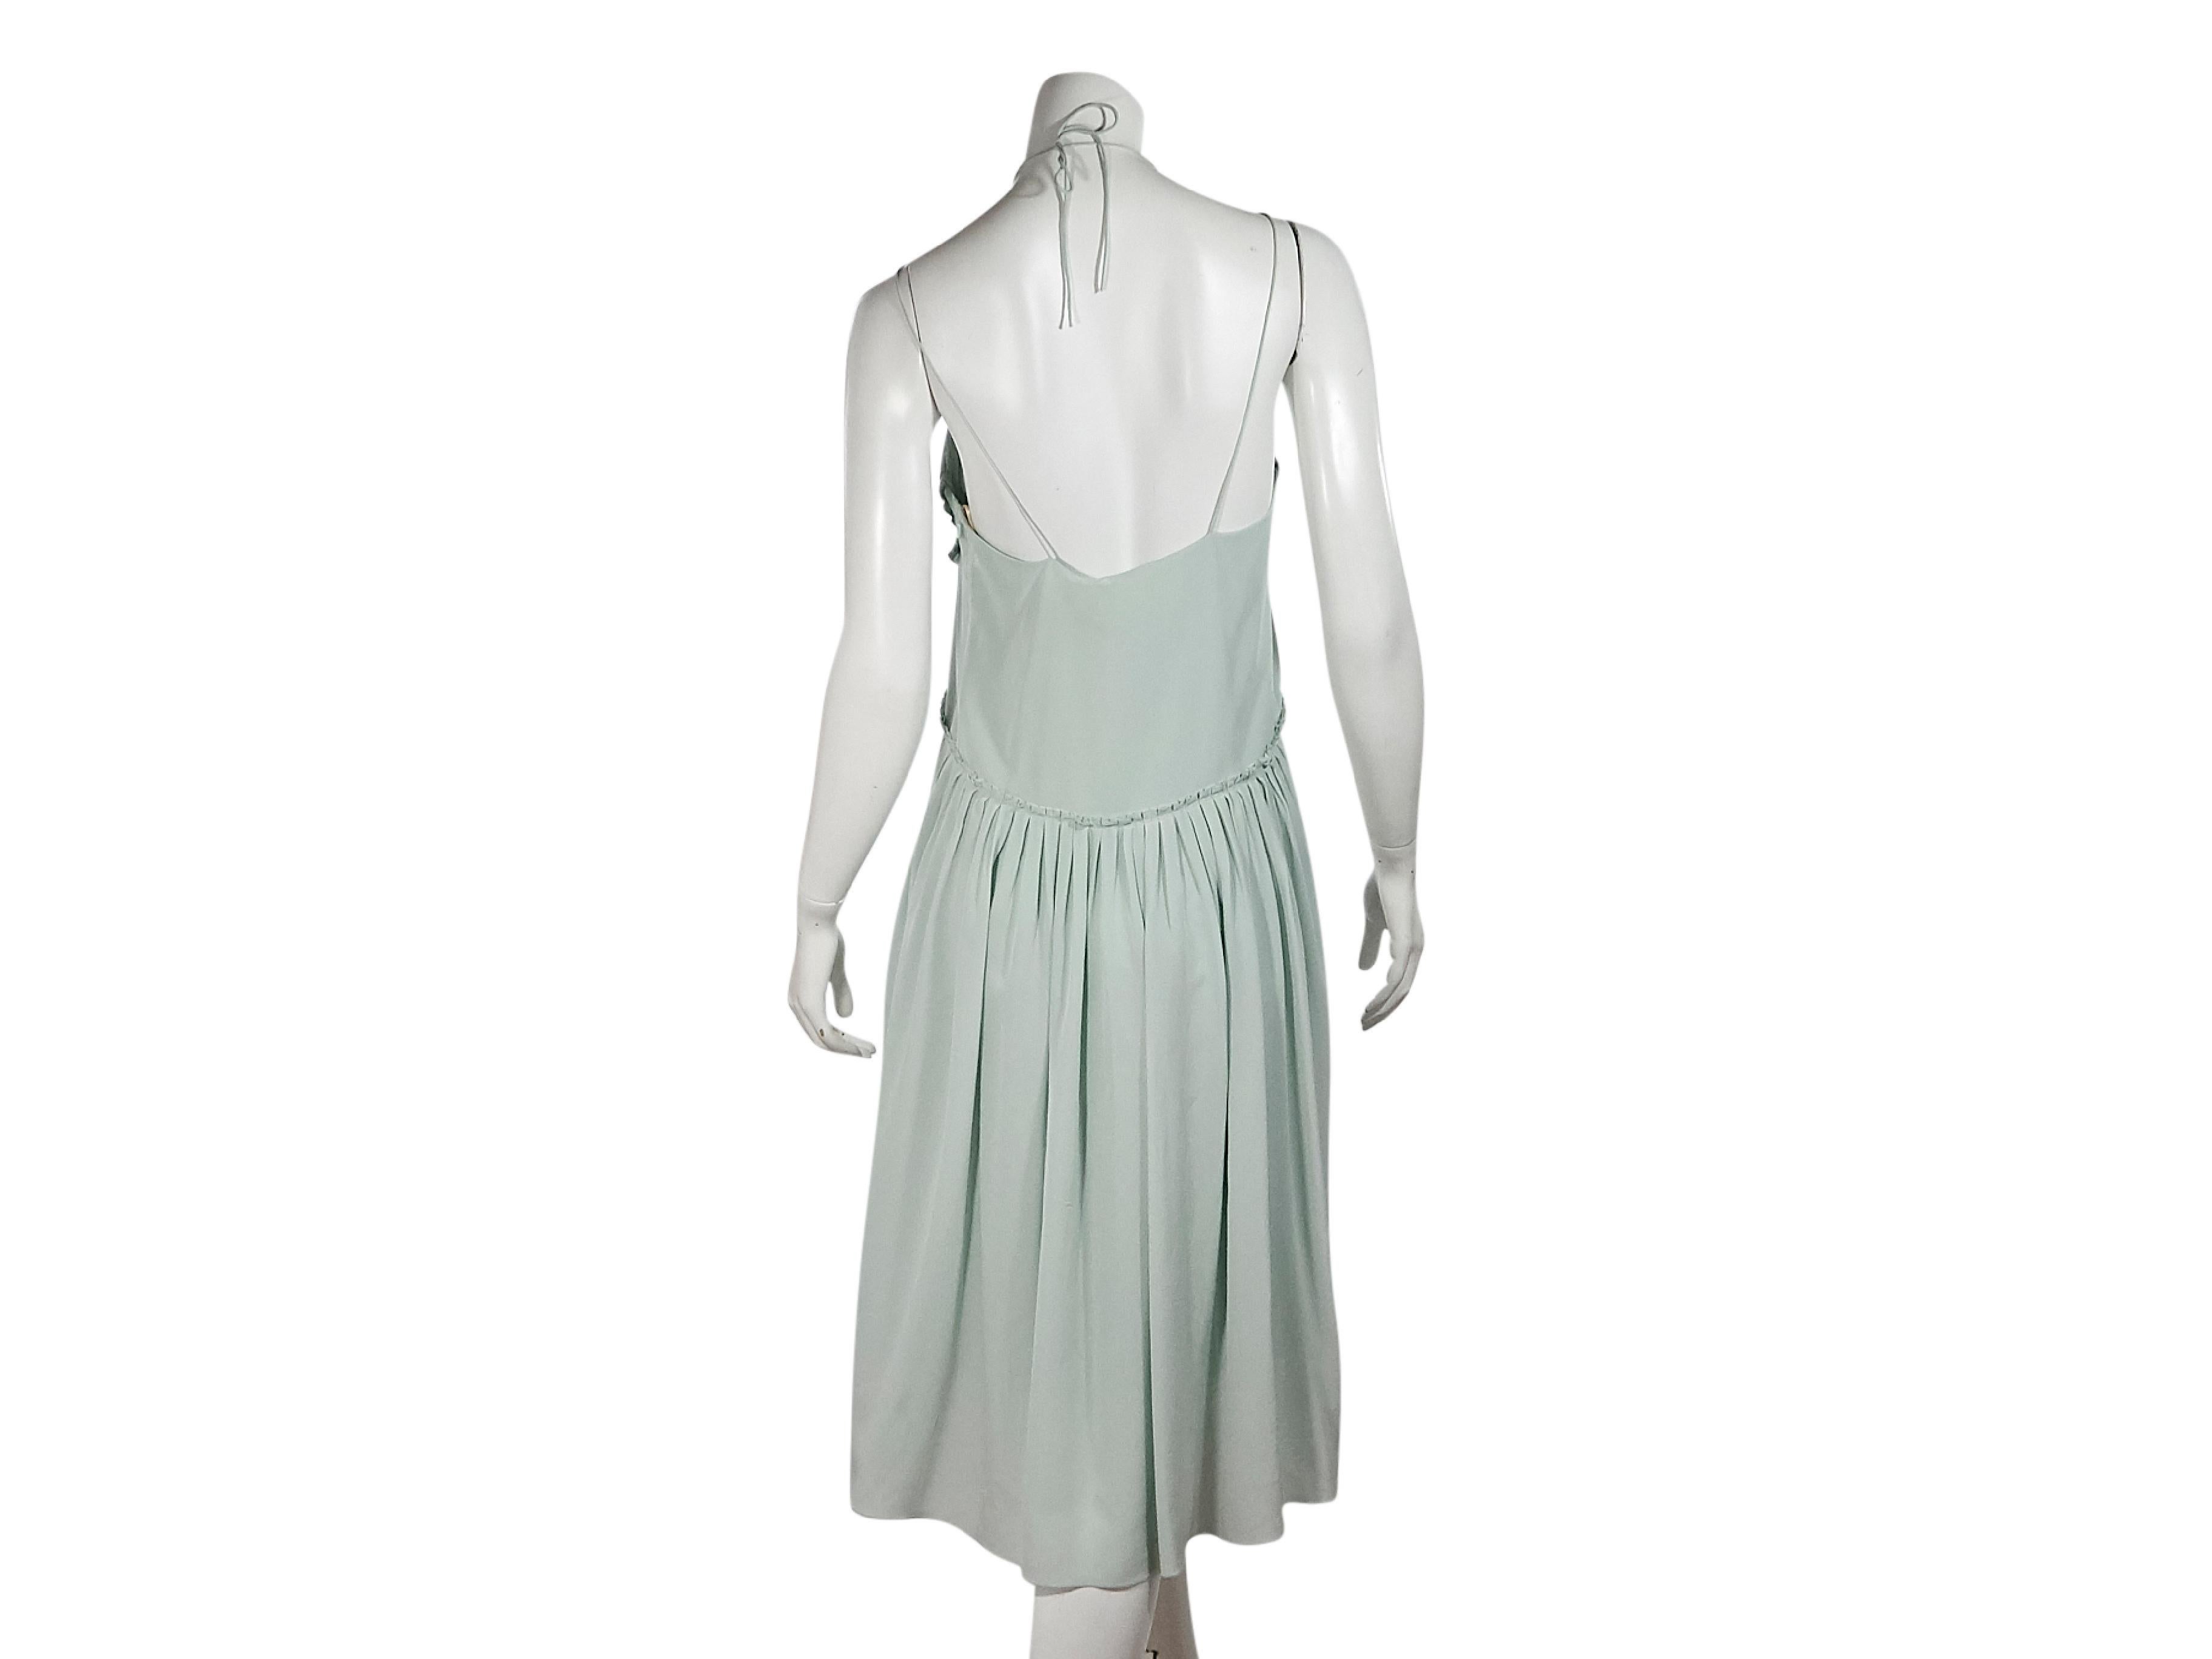 Product details:  Mint green pleated silk dress by Chloe.  Scoopneck.  Sleeveless.  Self-tie halterneck.  Concealed side zip closure.  33